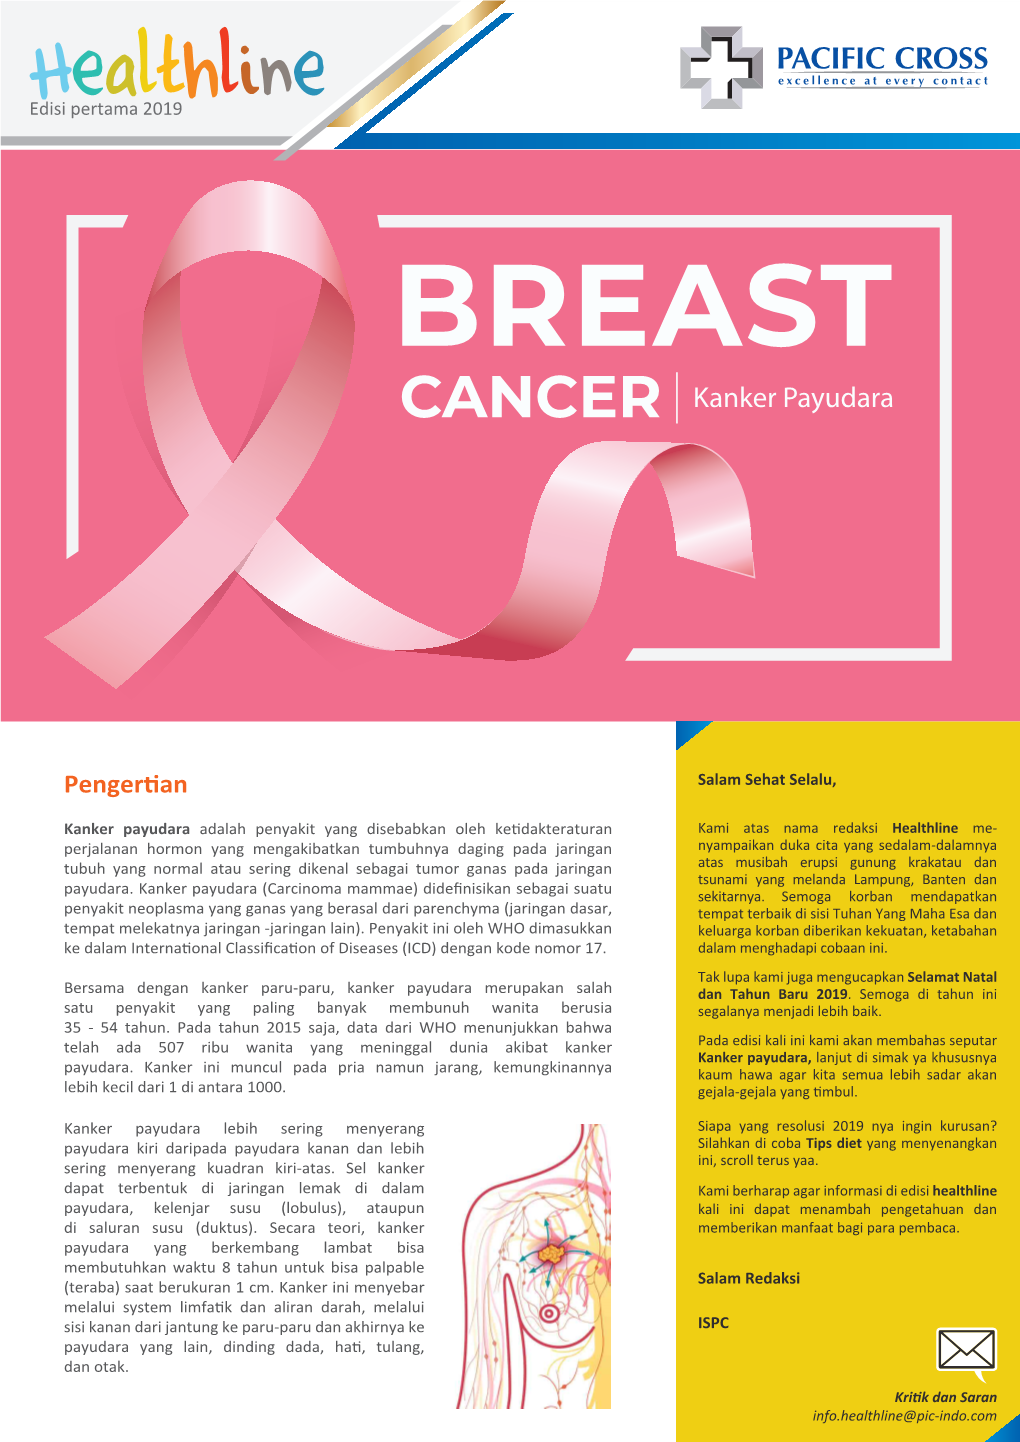 BREAST CANCER Kanker Payudara